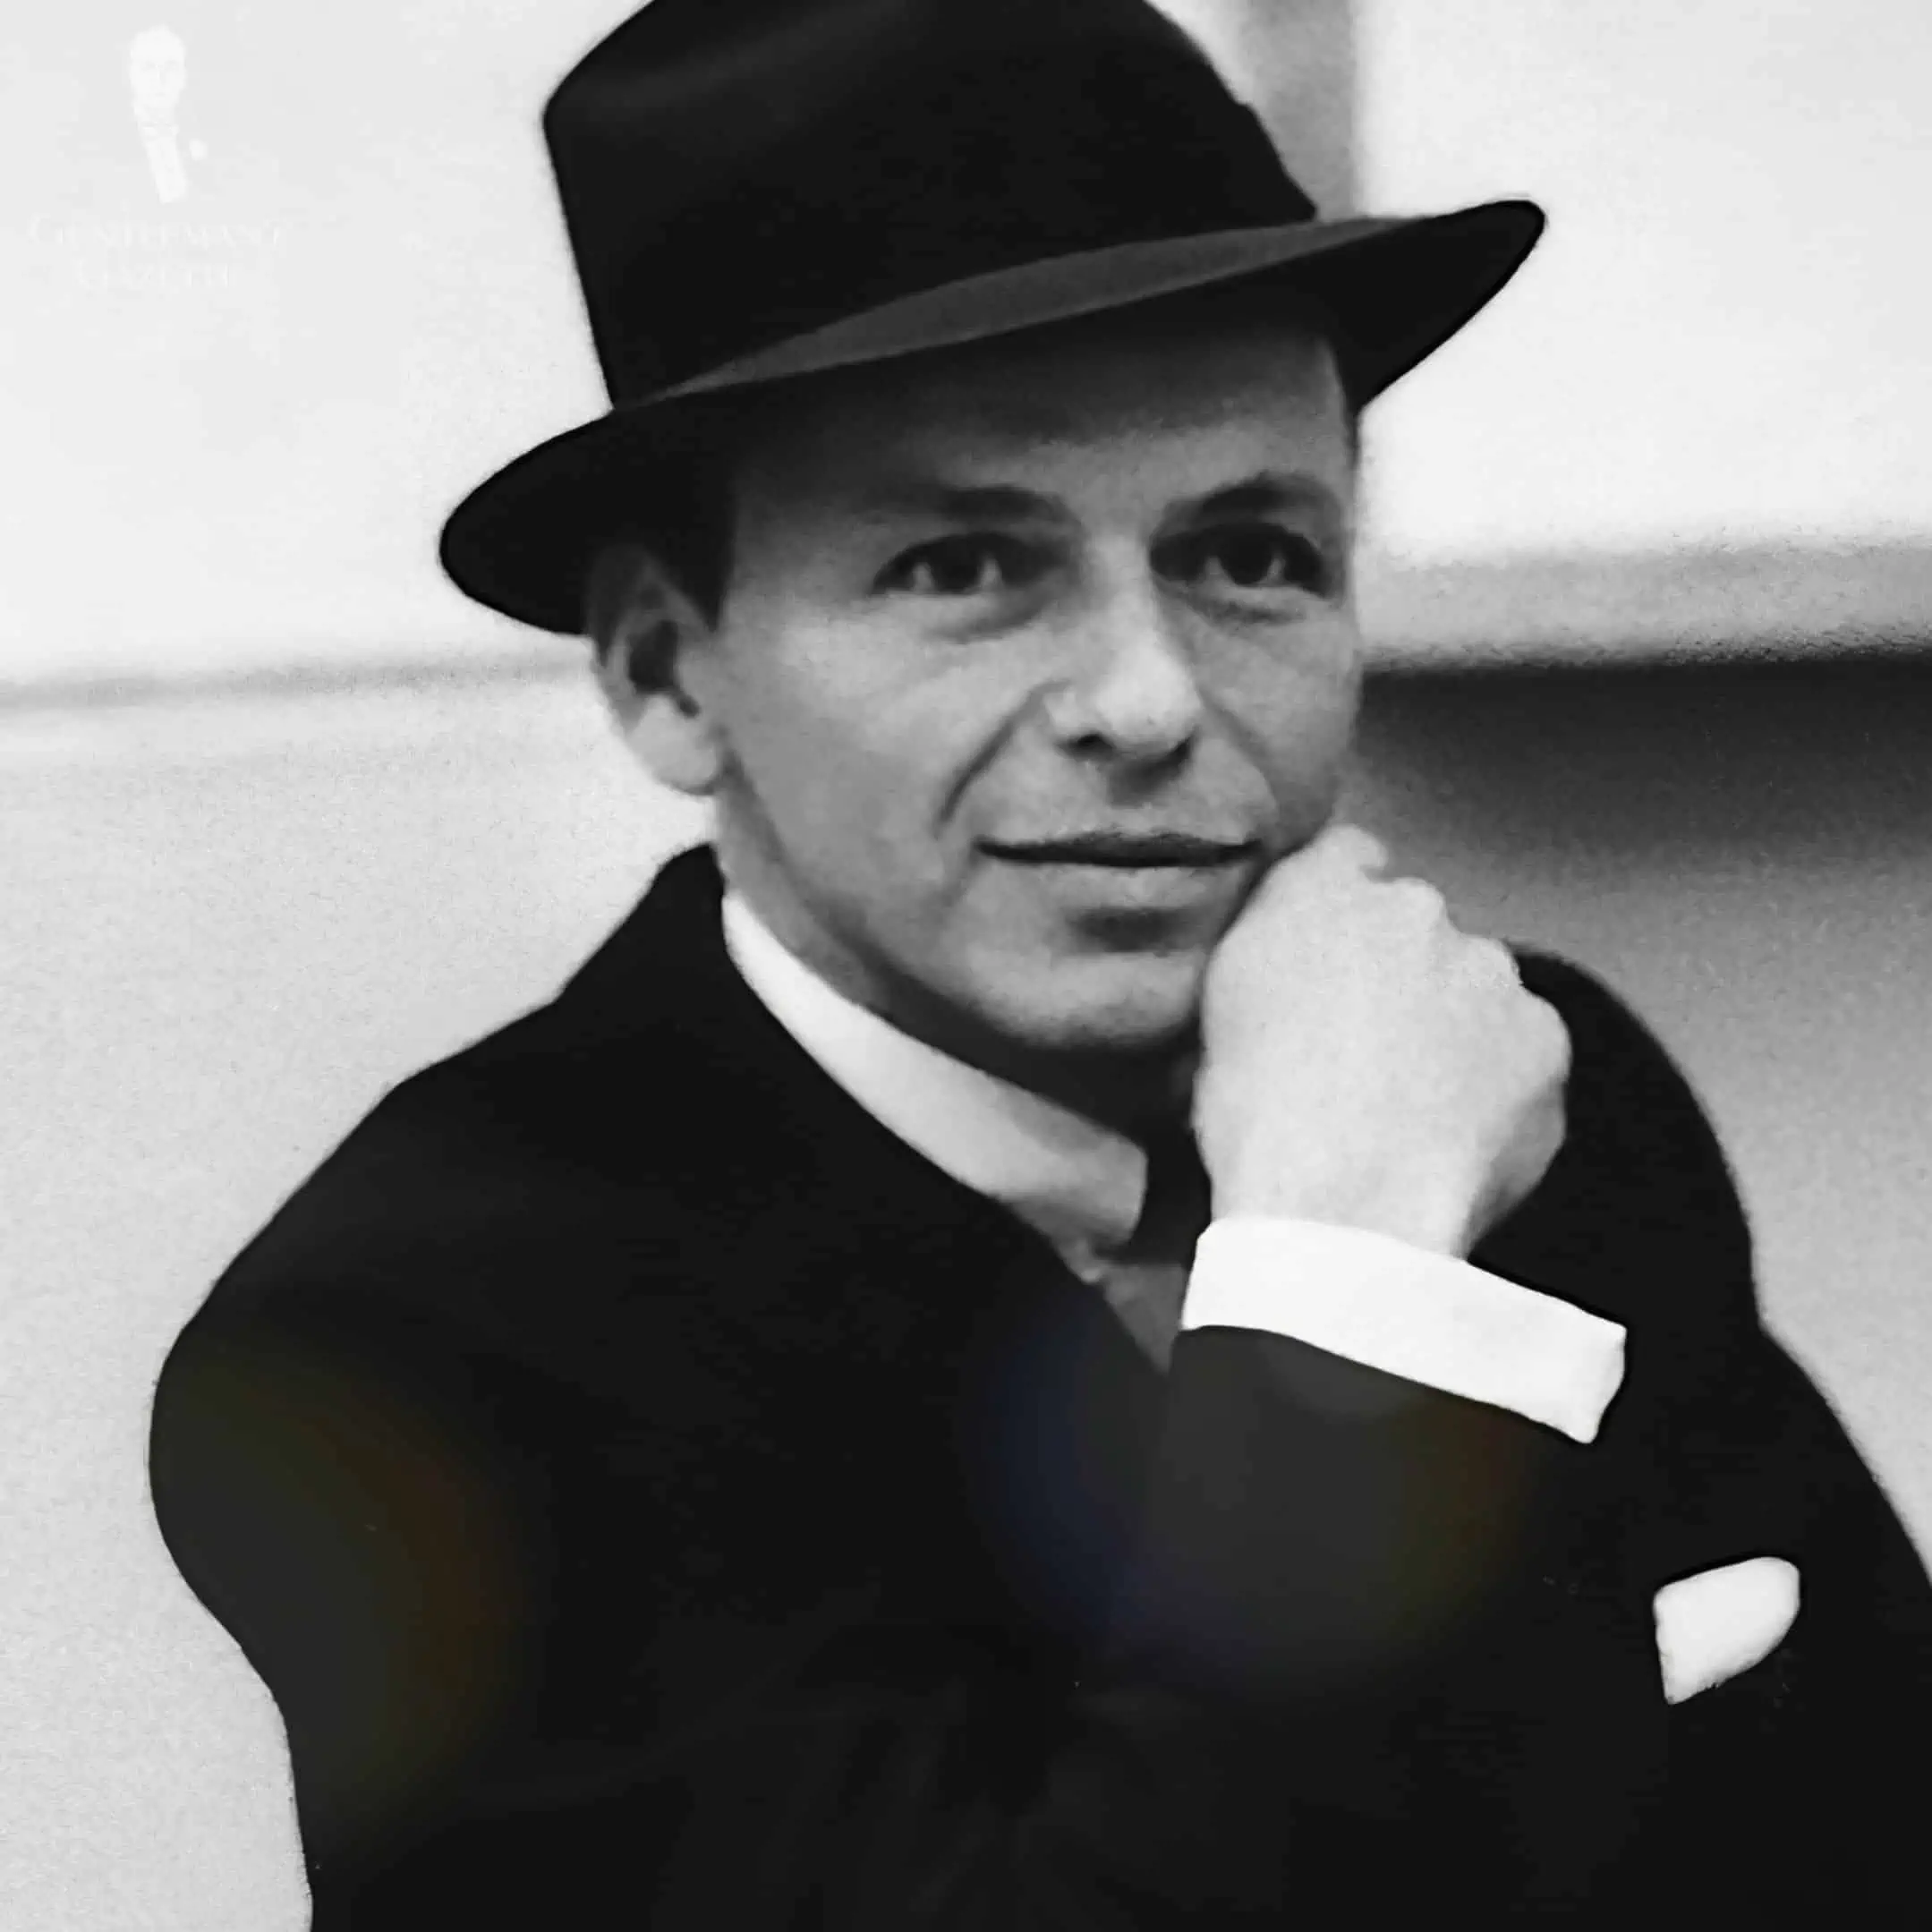 Photo of Frank Sinatra dark suit cocked hat